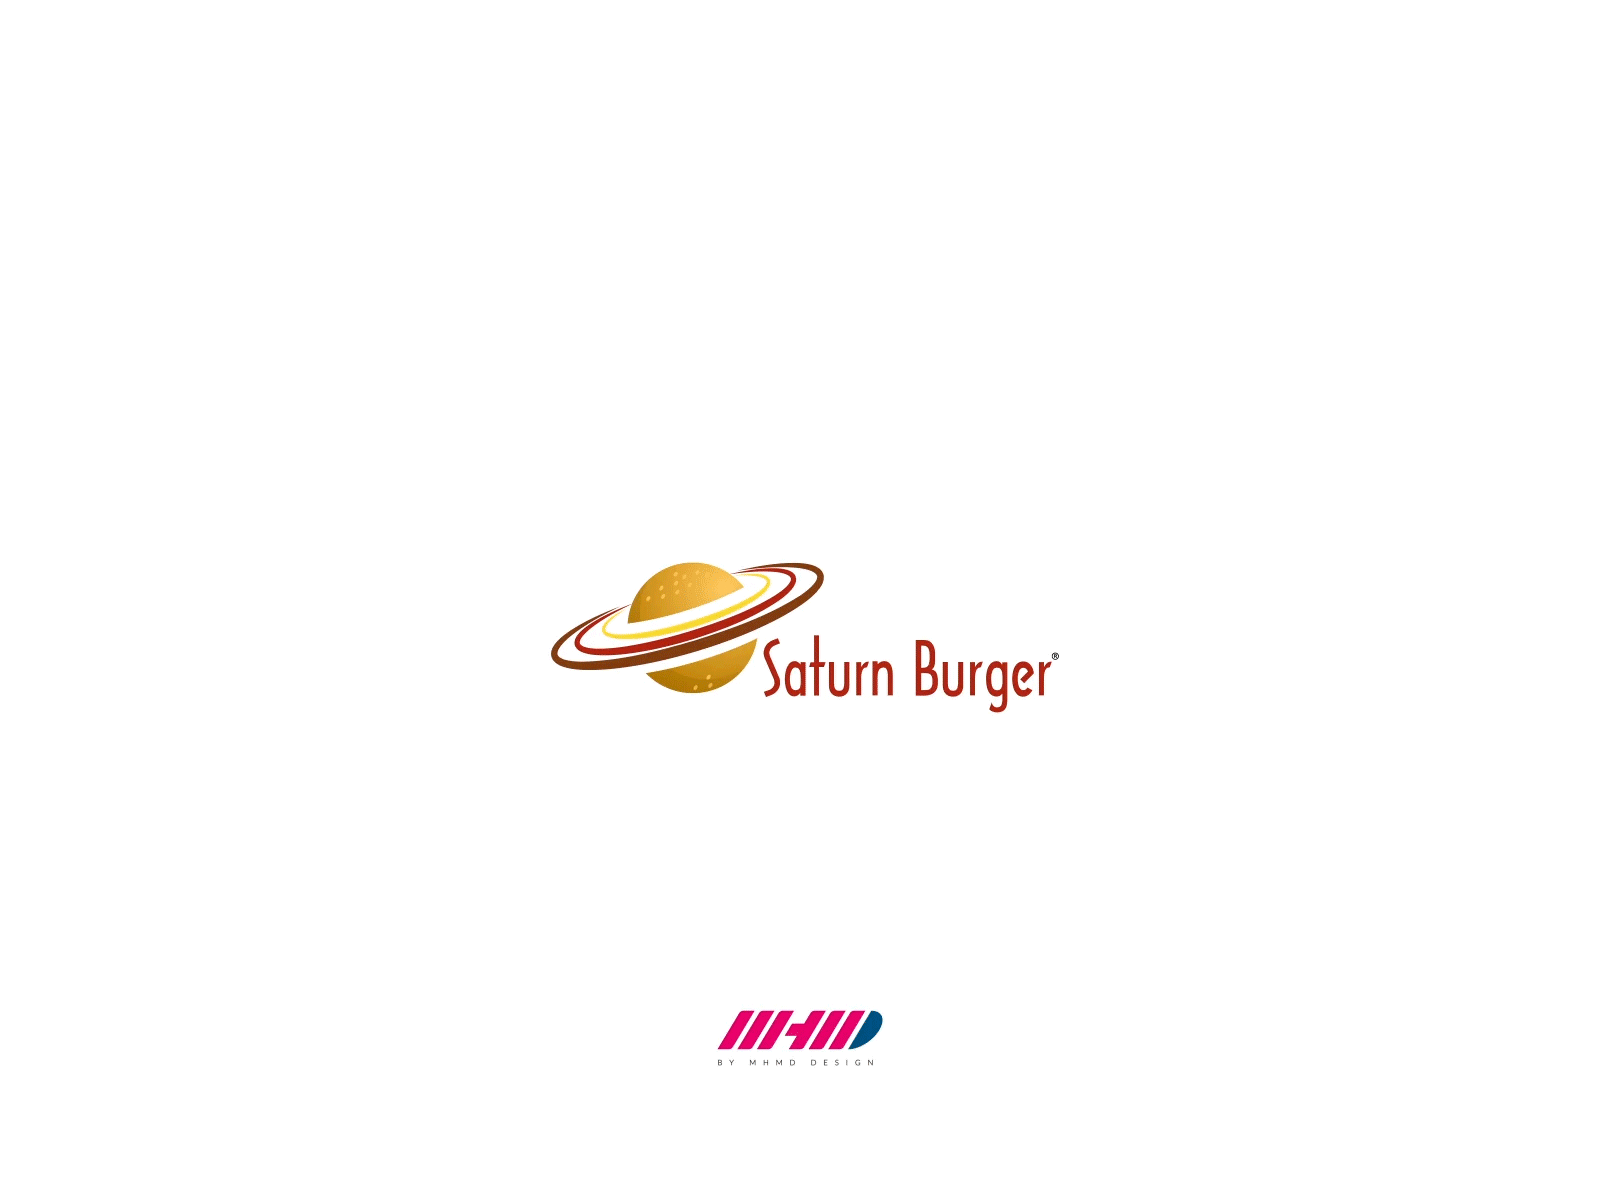 Saturn Burger logo animation